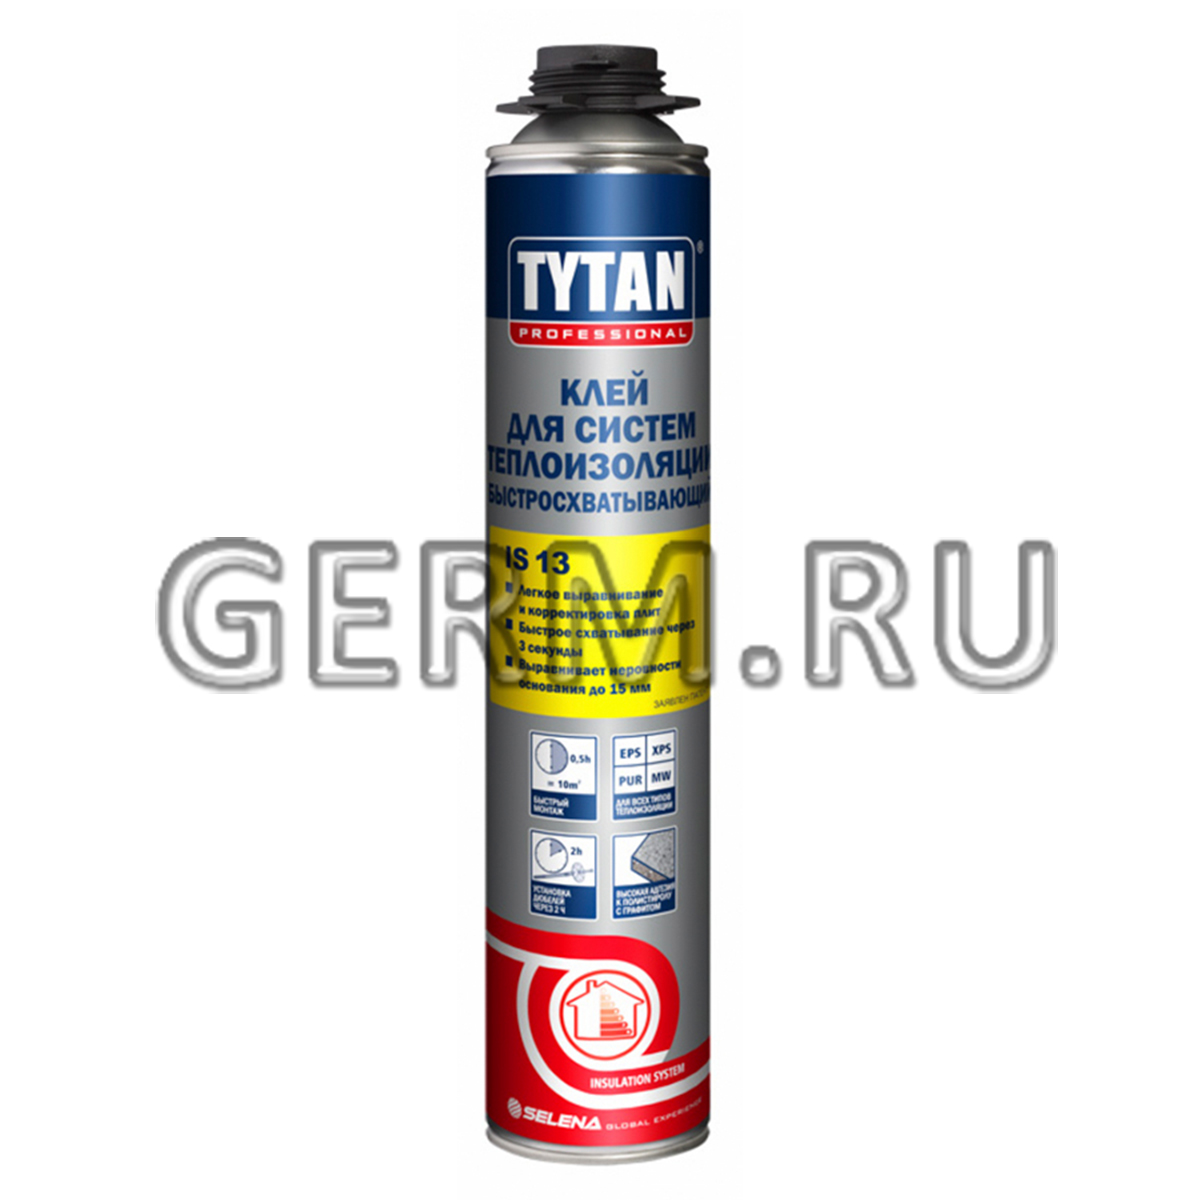 TYTAN Professional IS 13 клей для систем теплоизоляции